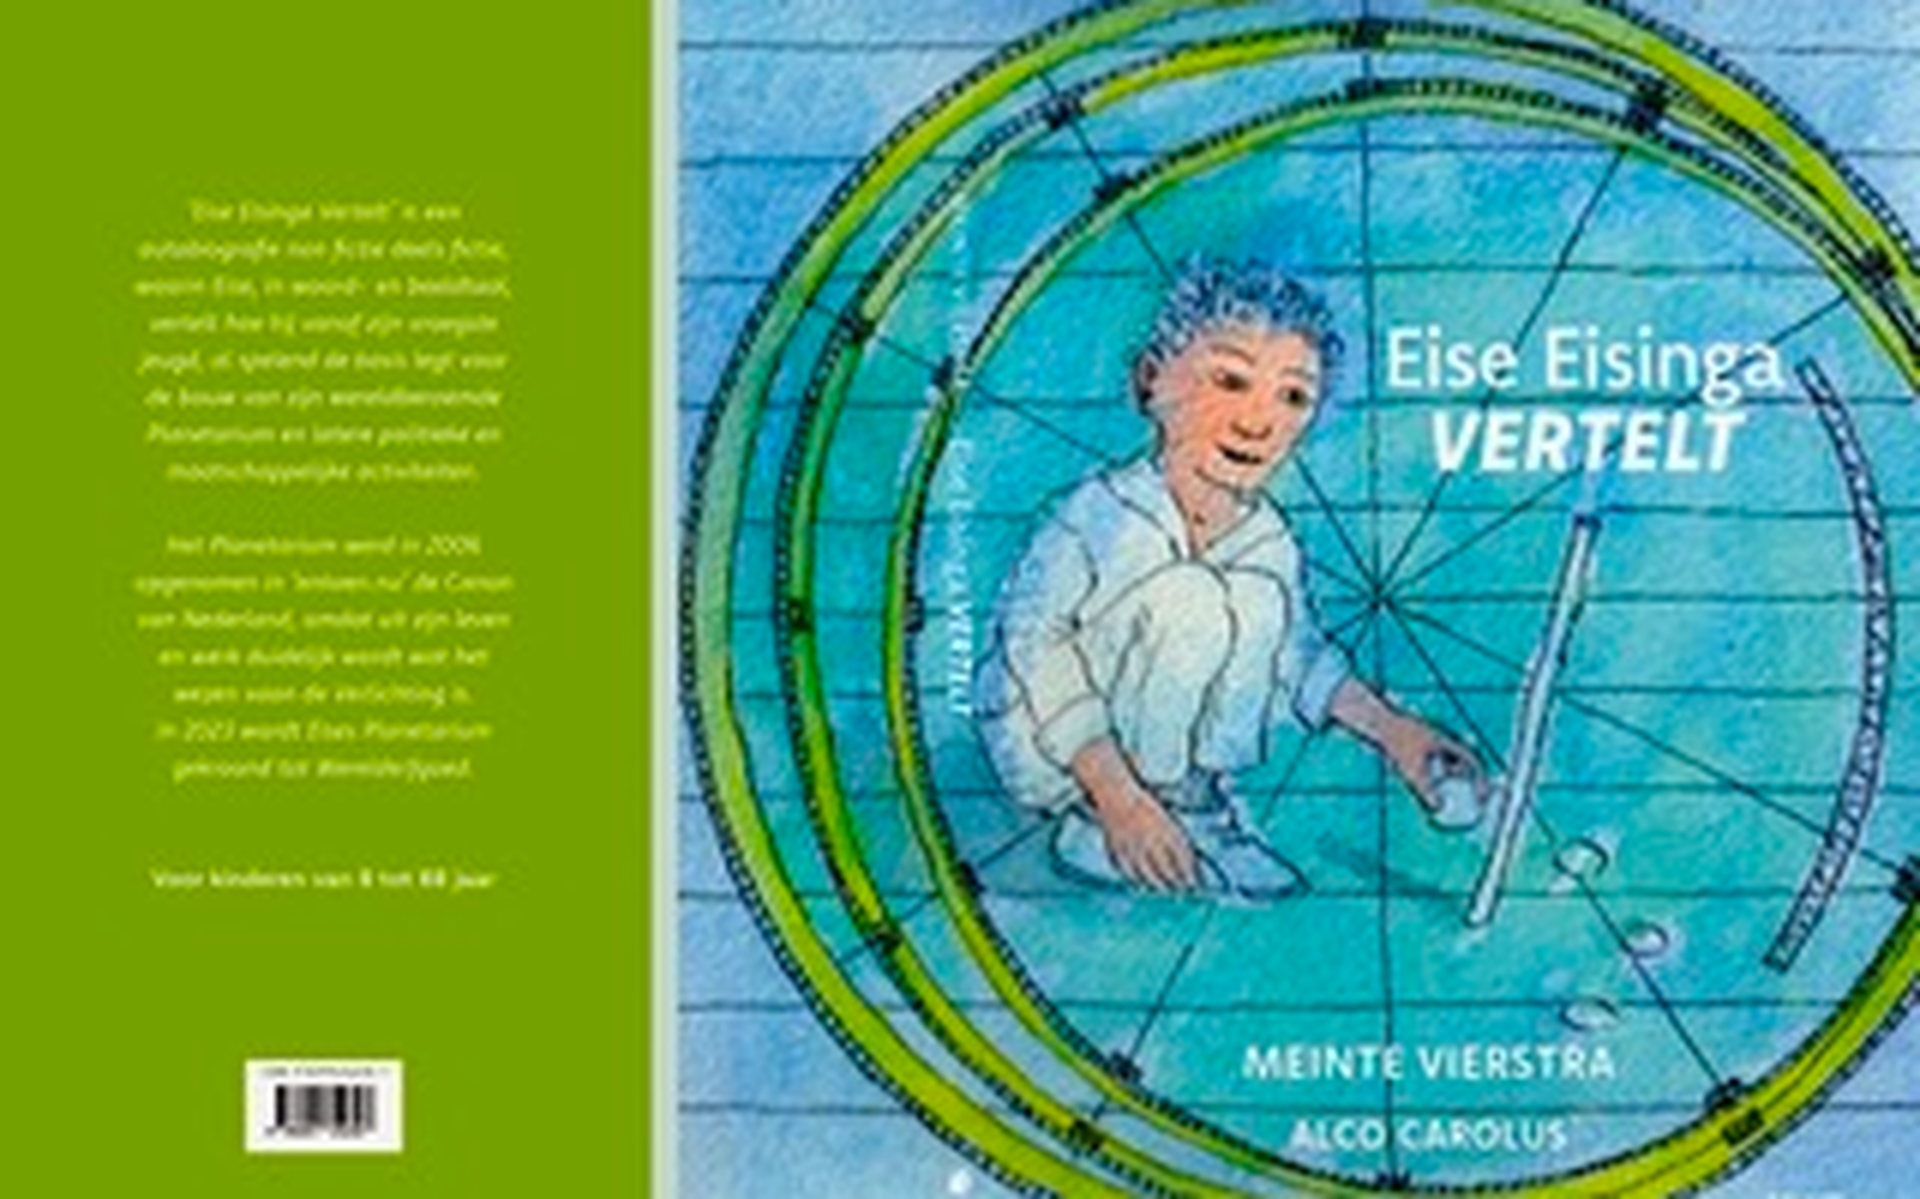 Omslag van 'Eise Eisinga vertelt', van illustrator Alco Carolus en verteller Meinte Vierstra. 